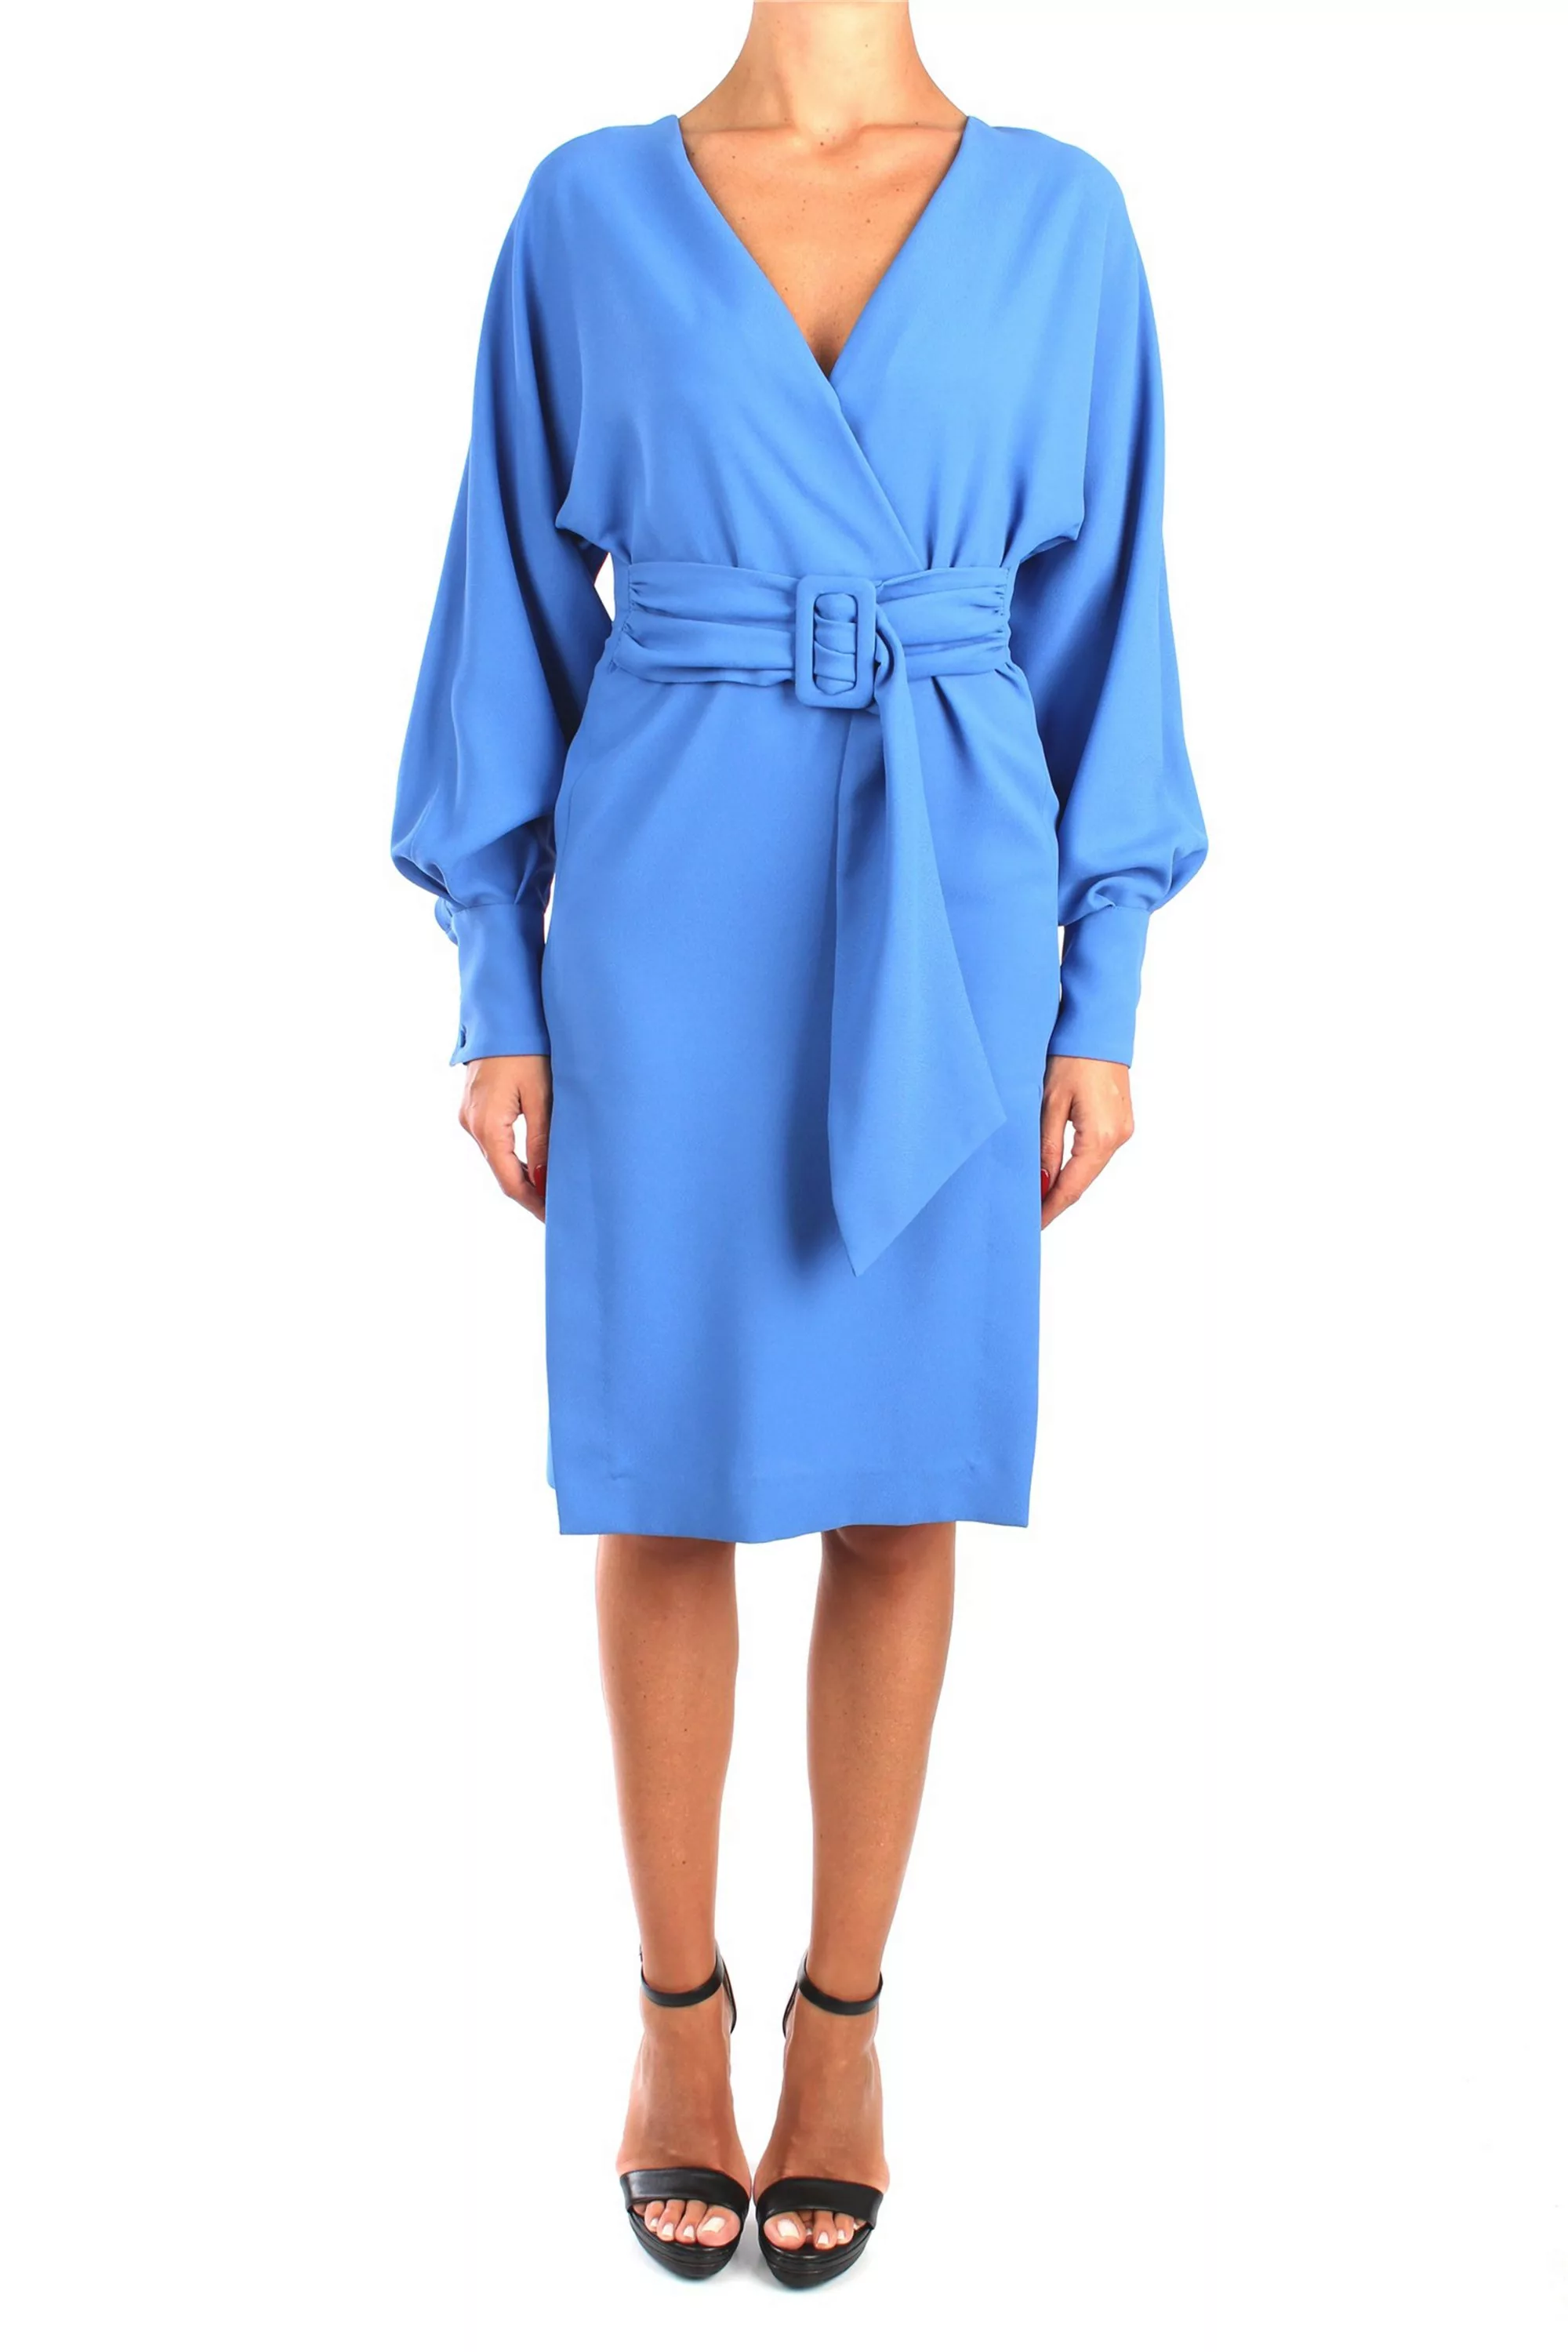 SIMONA CORSELLINI Kleid Damen Bluette poliestere günstig online kaufen